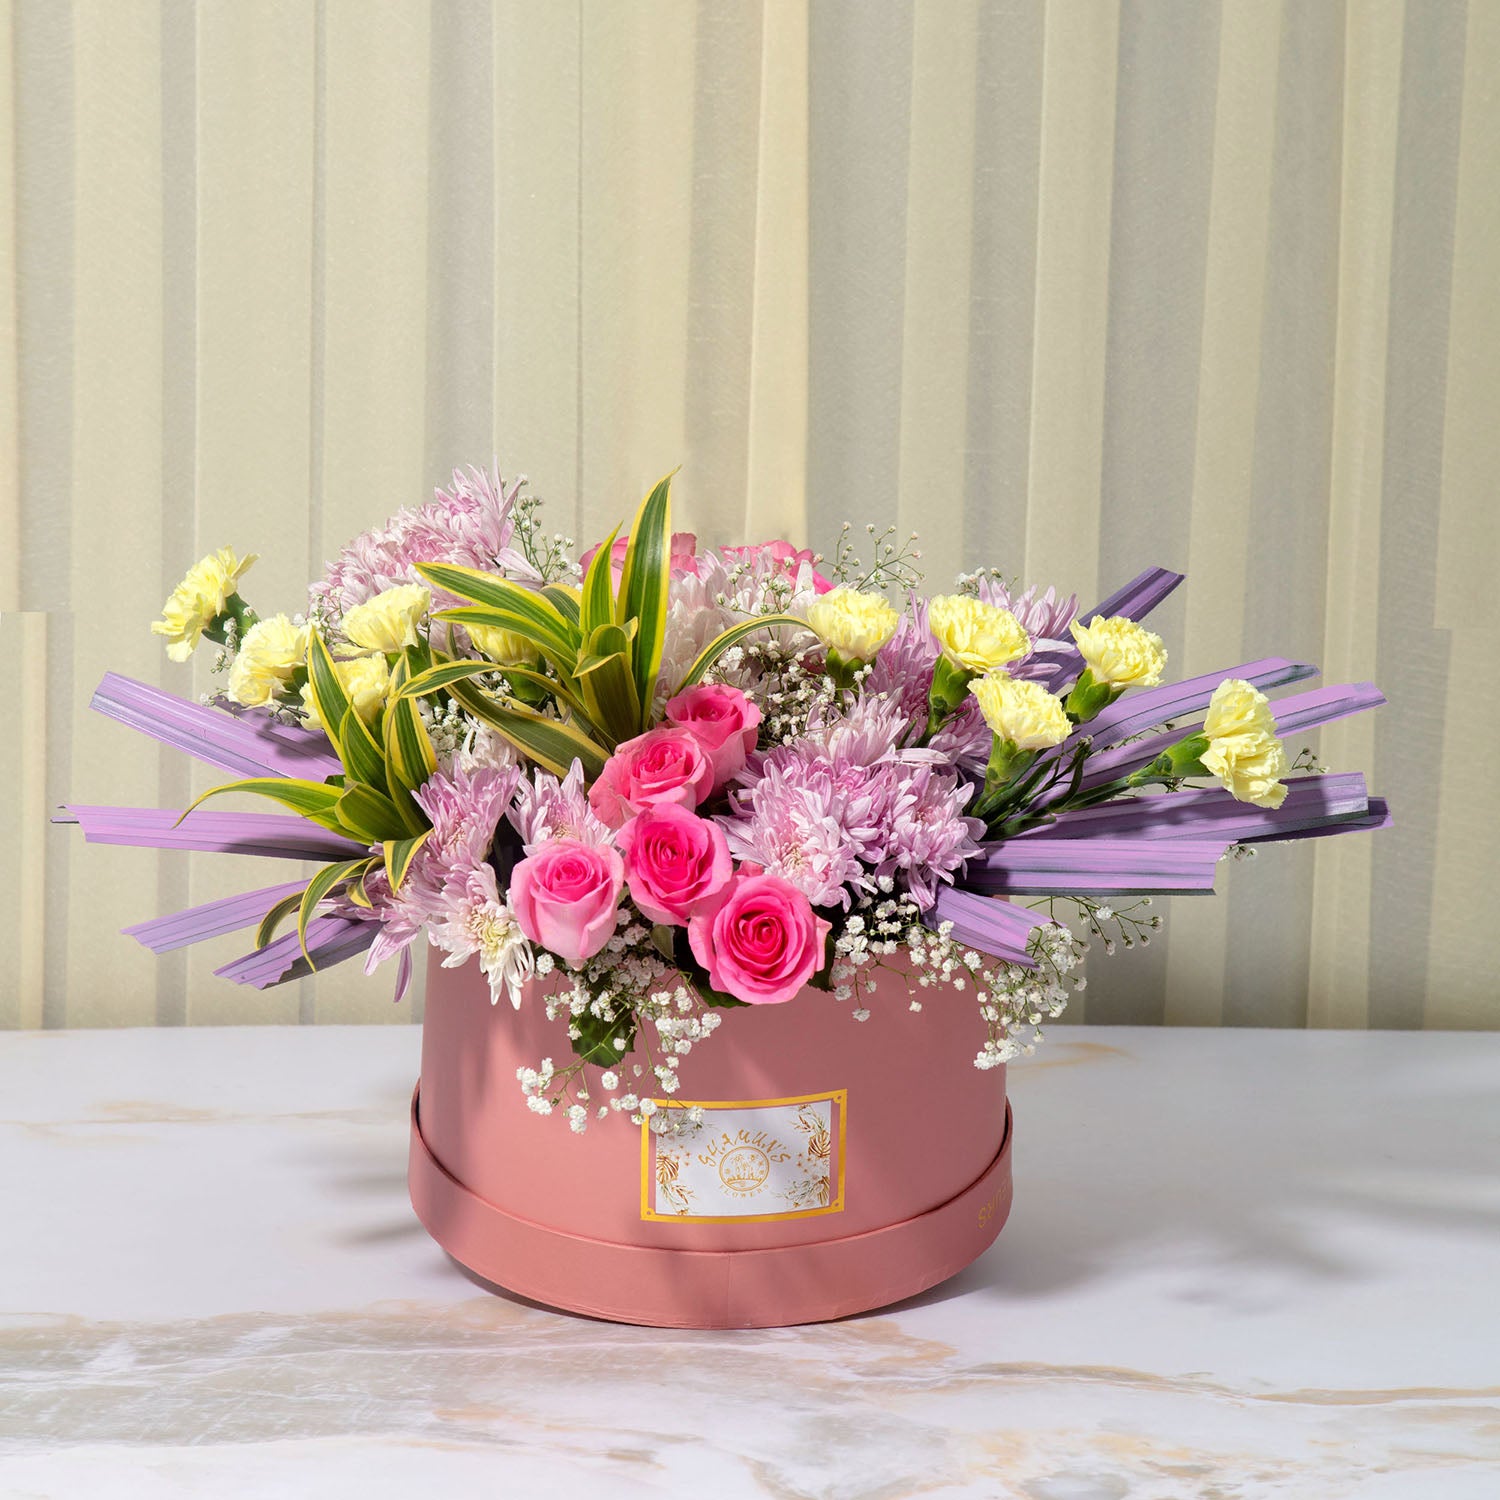 bouquet delivery online - mix flowers